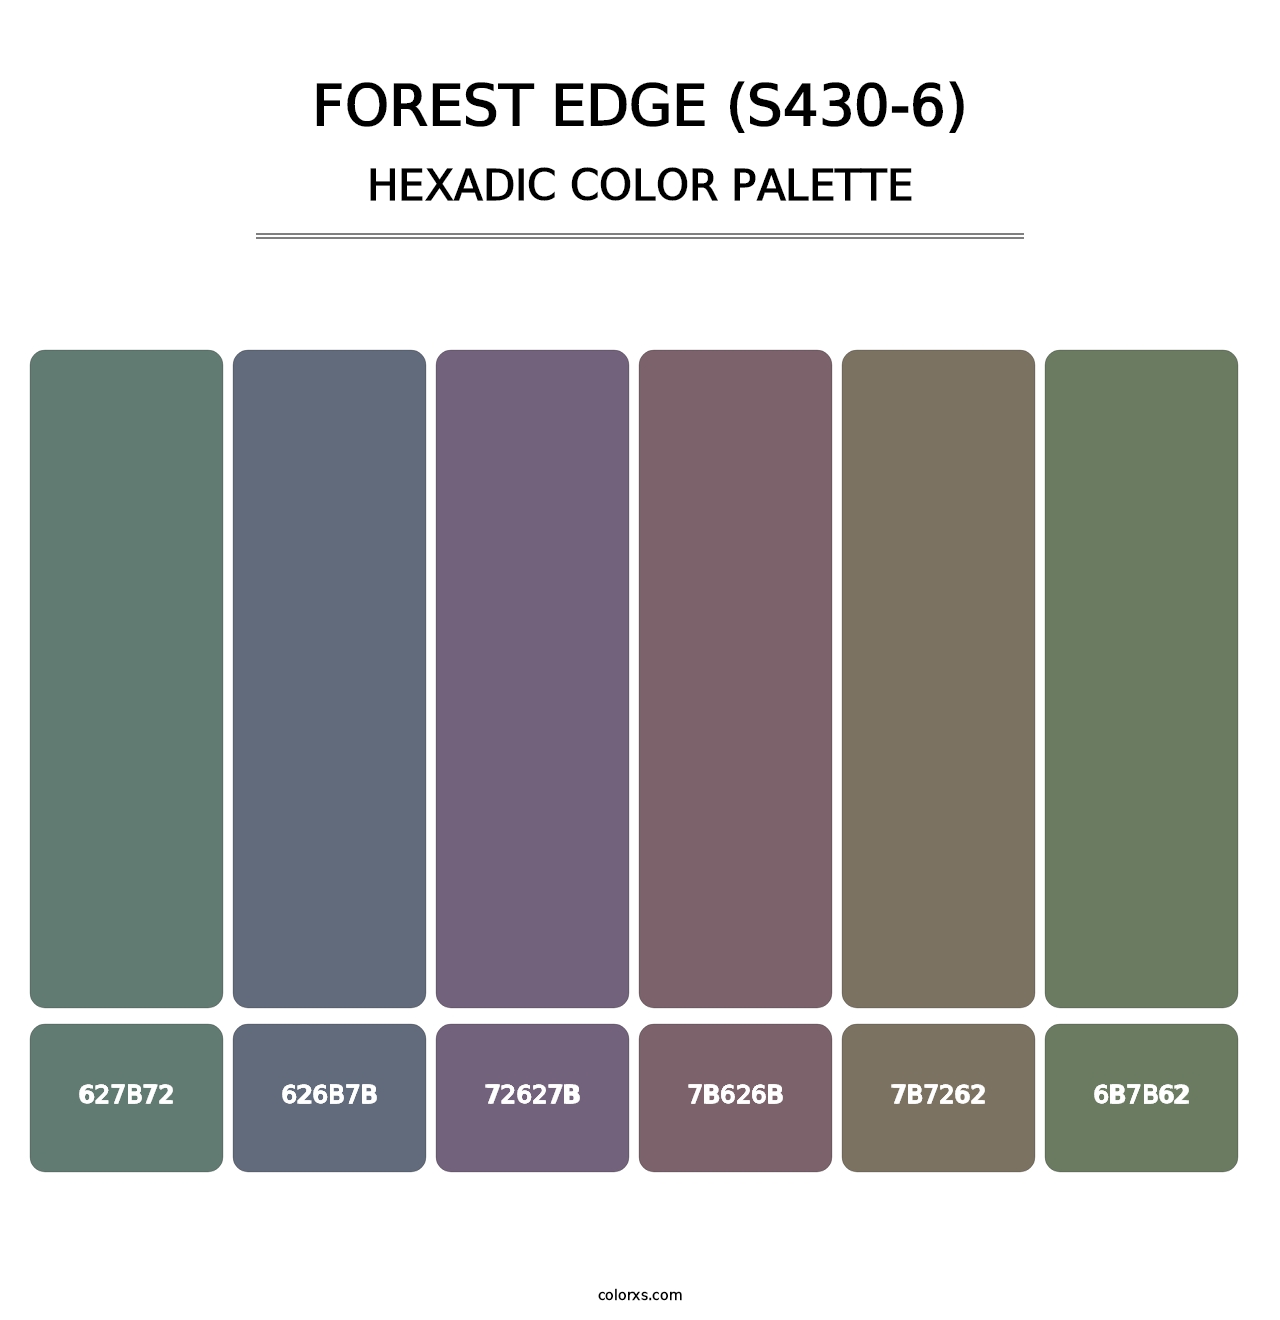 Forest Edge (S430-6) - Hexadic Color Palette